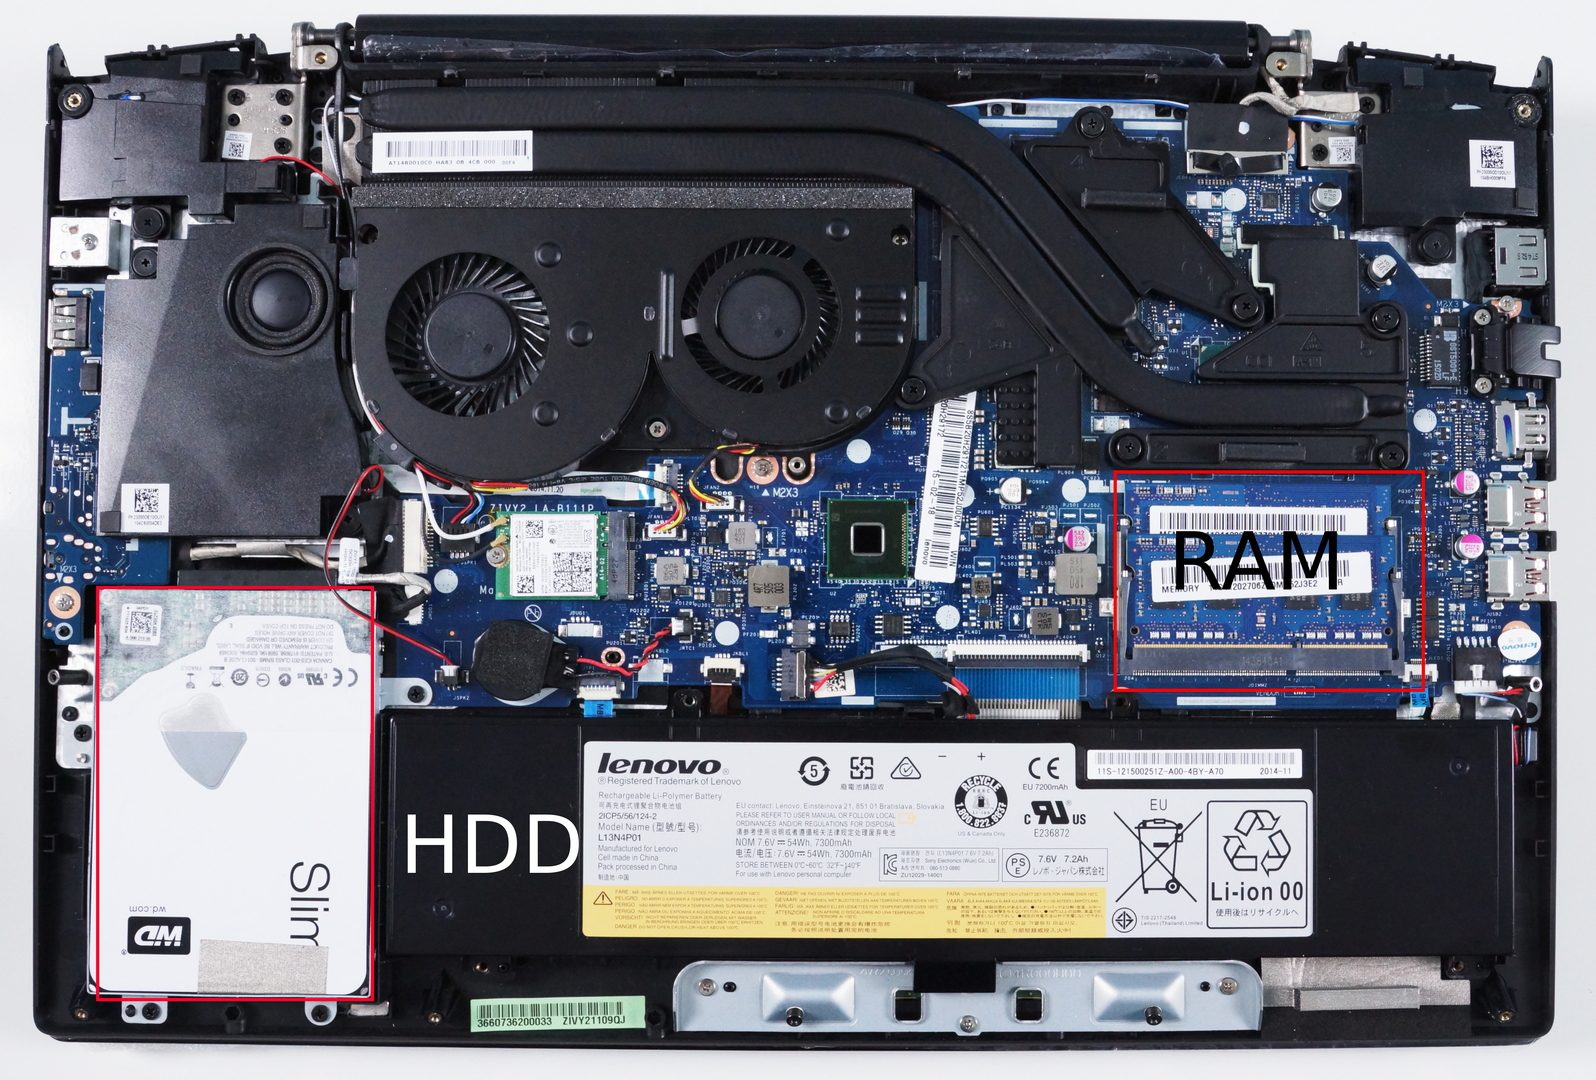 koncept Fahrenheit evne Inside the new Lenovo Y50 (GTX 960M) – disassembly, internal photos and  upgrade options | LaptopMedia.com